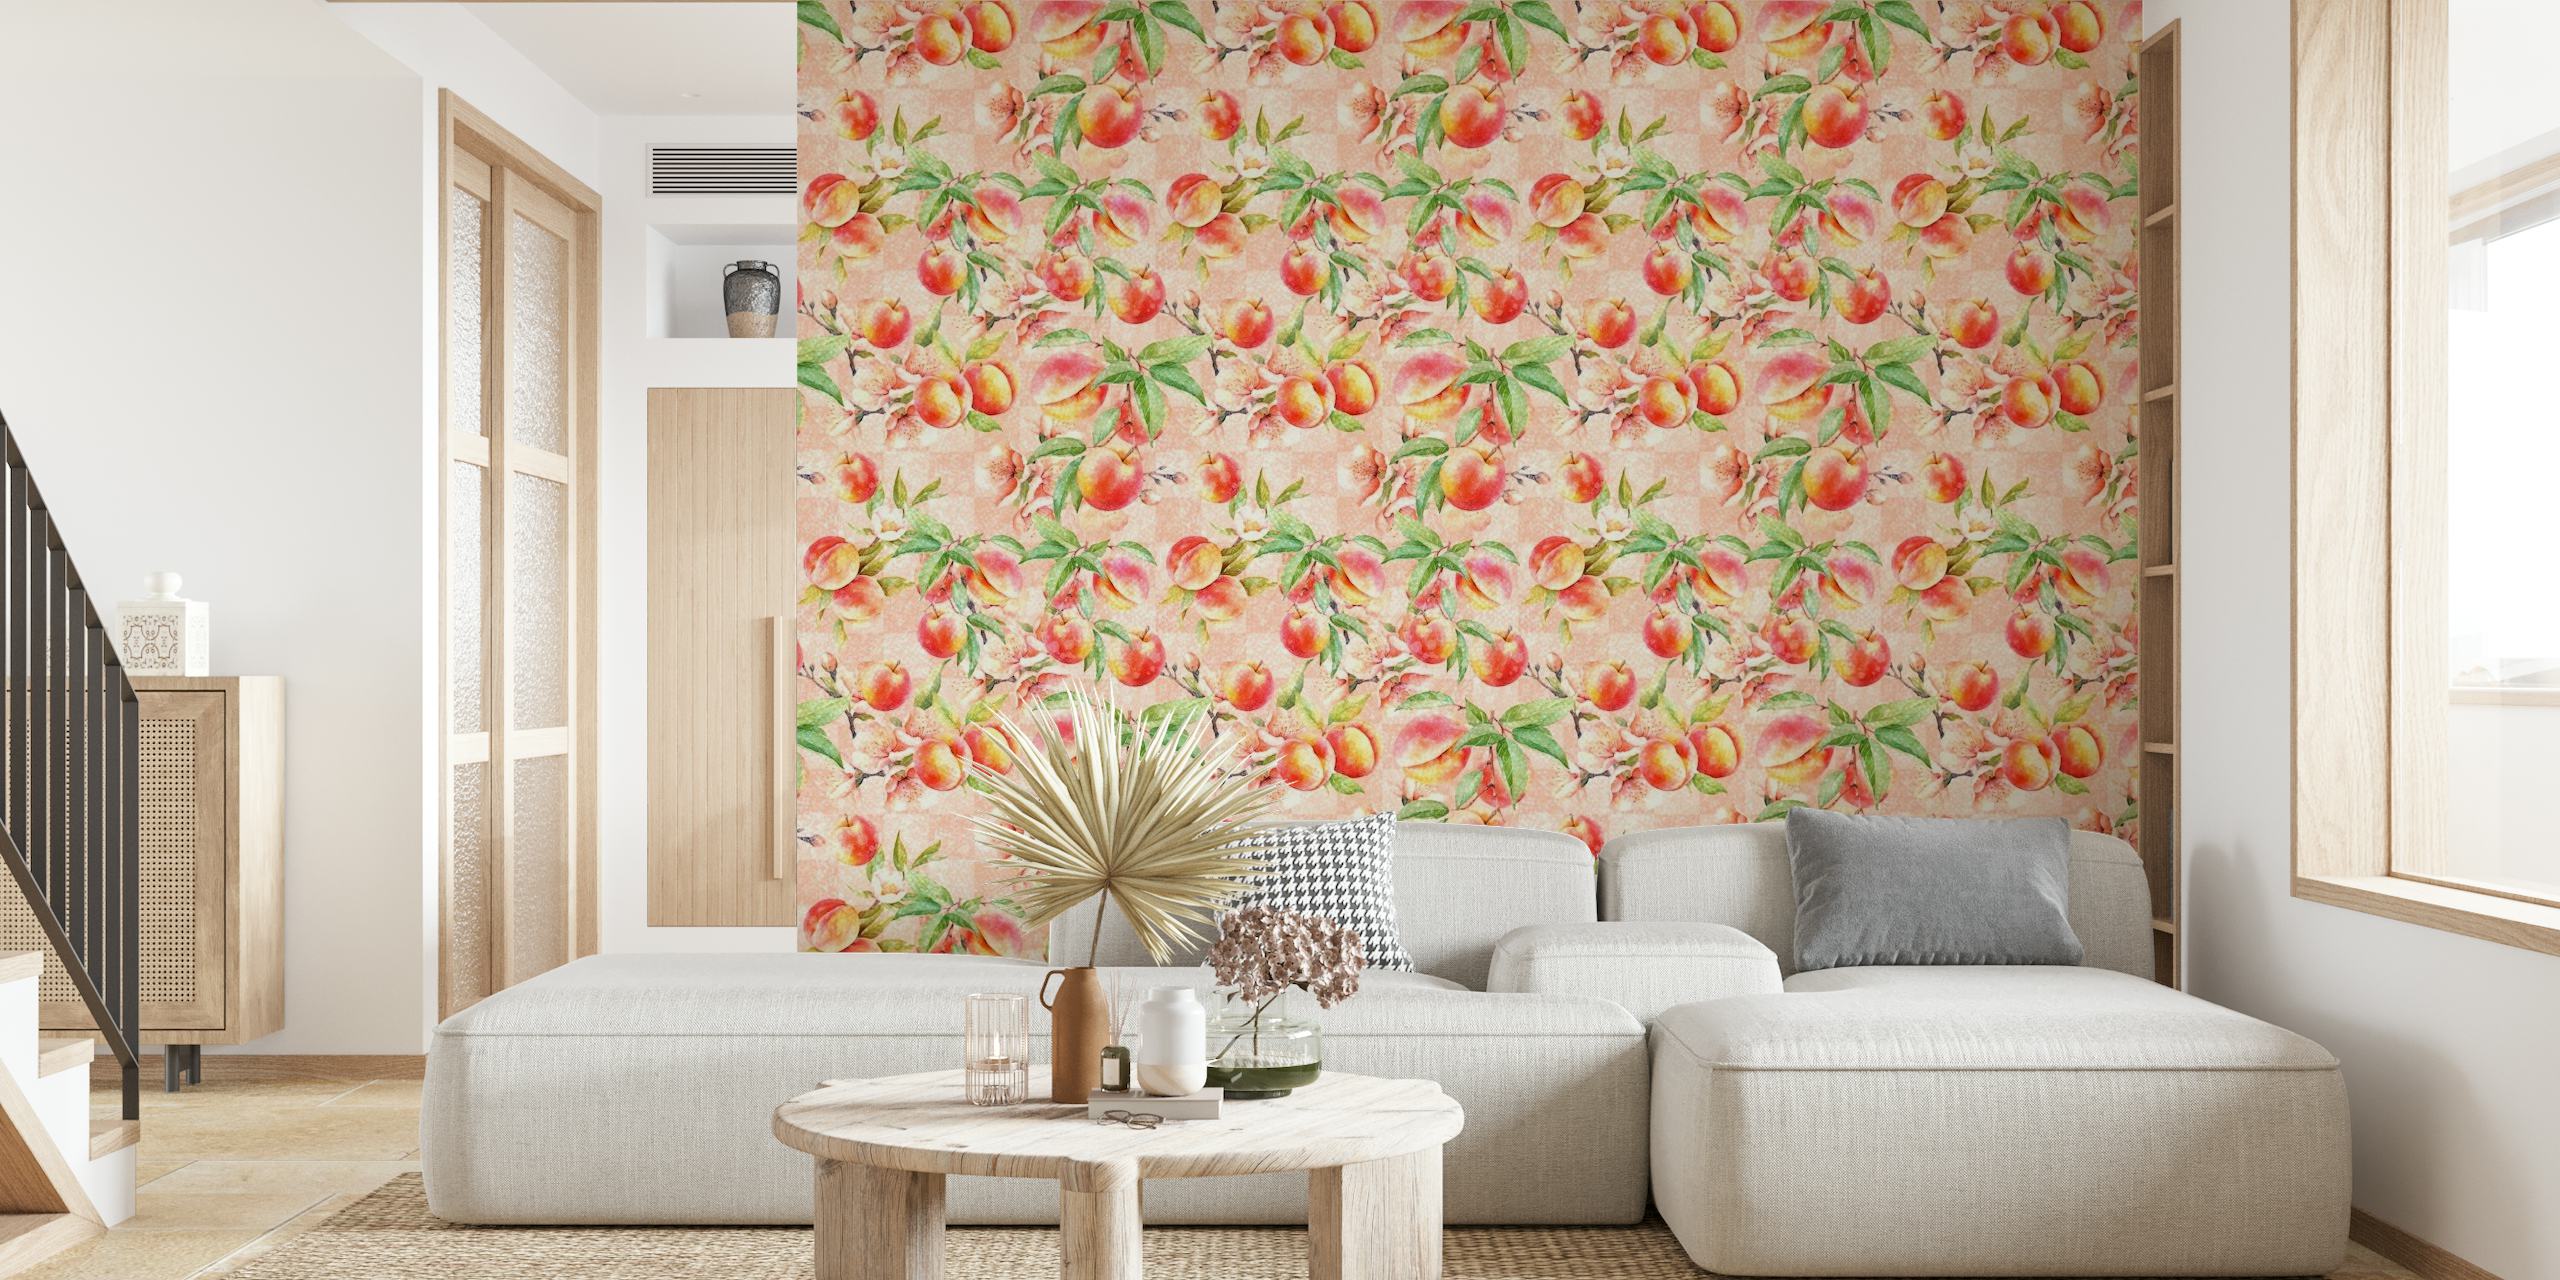 Peachy cheerful bright space wallpaper